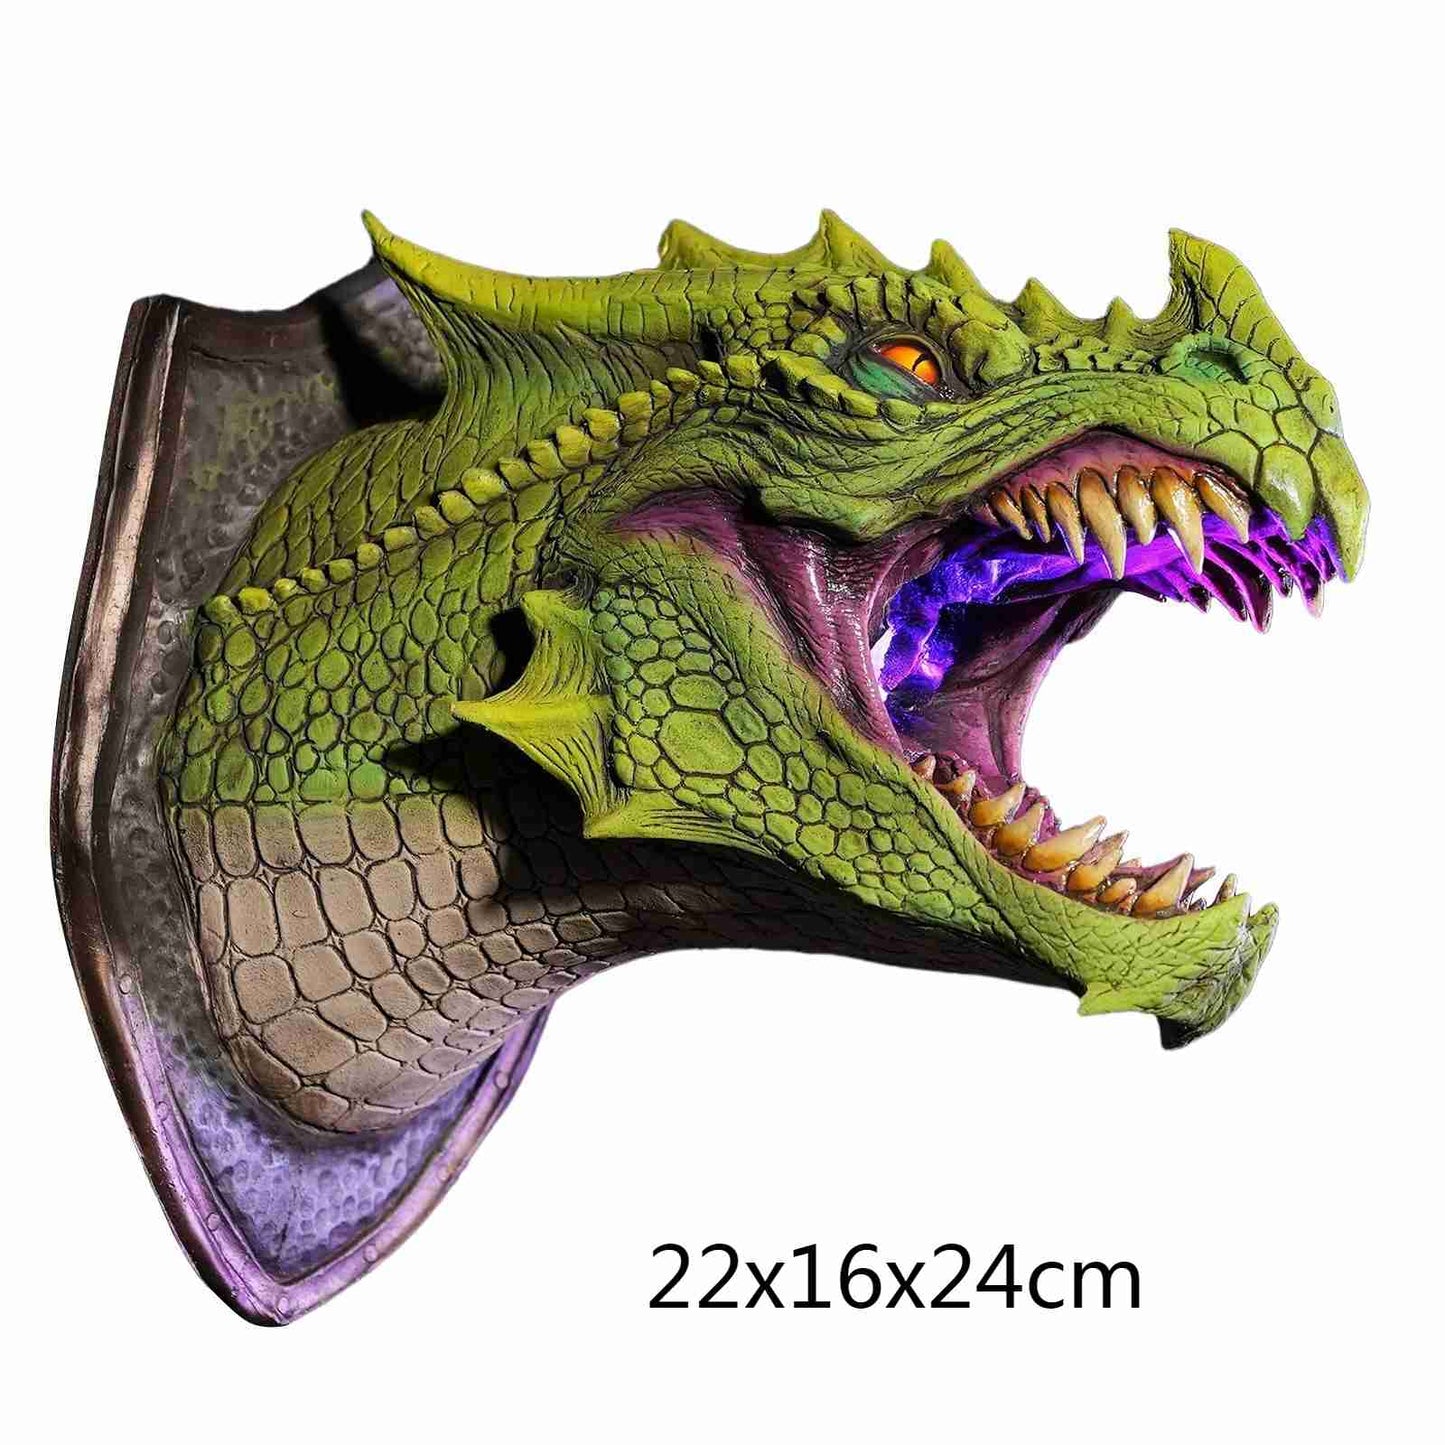 3D Wall Mounted Dragon - Smoke Light